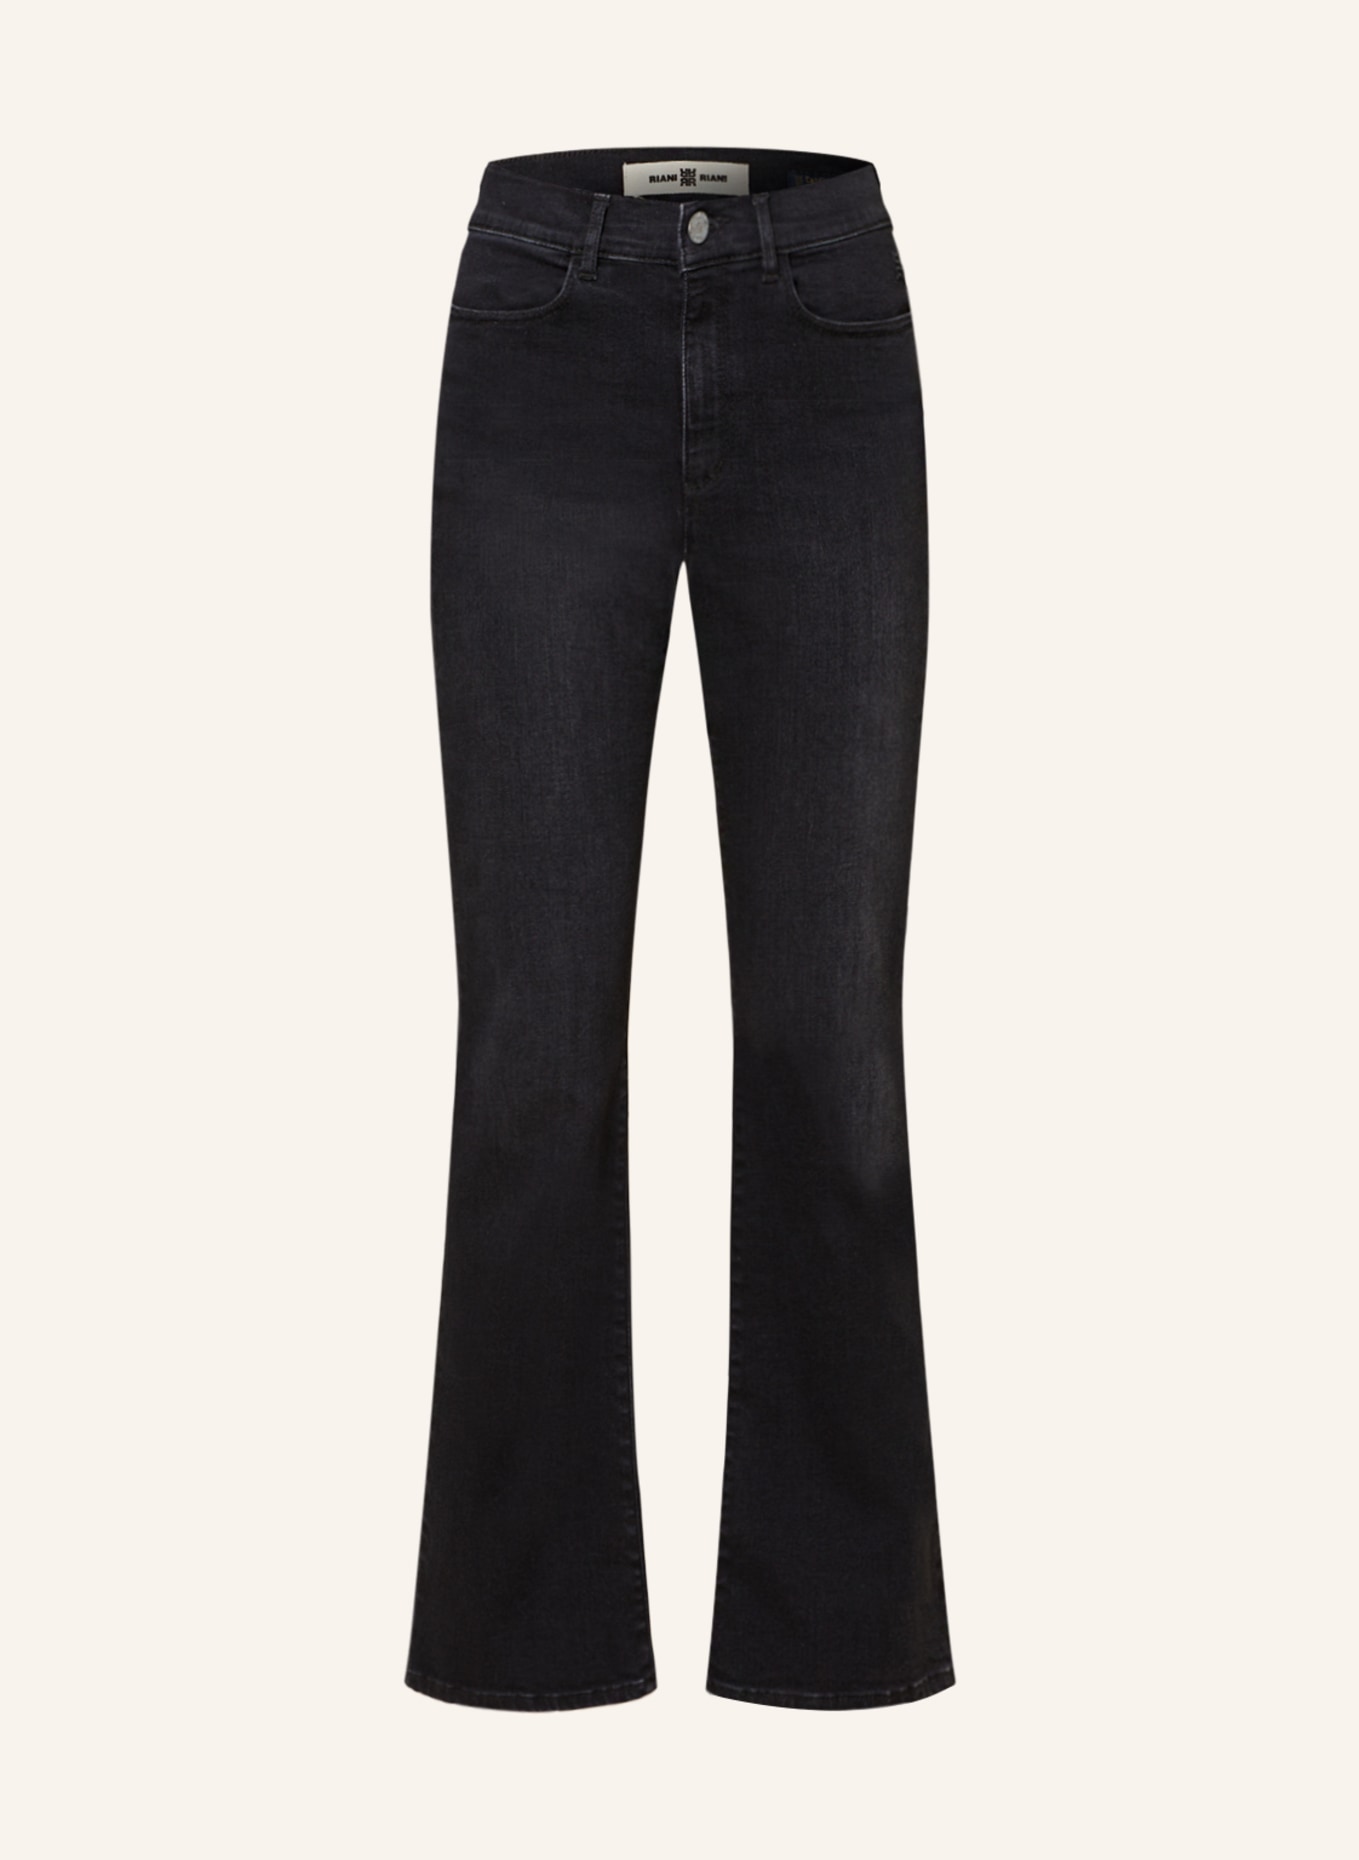 RIANI Bootcut Jeans, Farbe: 974 black used wash (Bild 1)